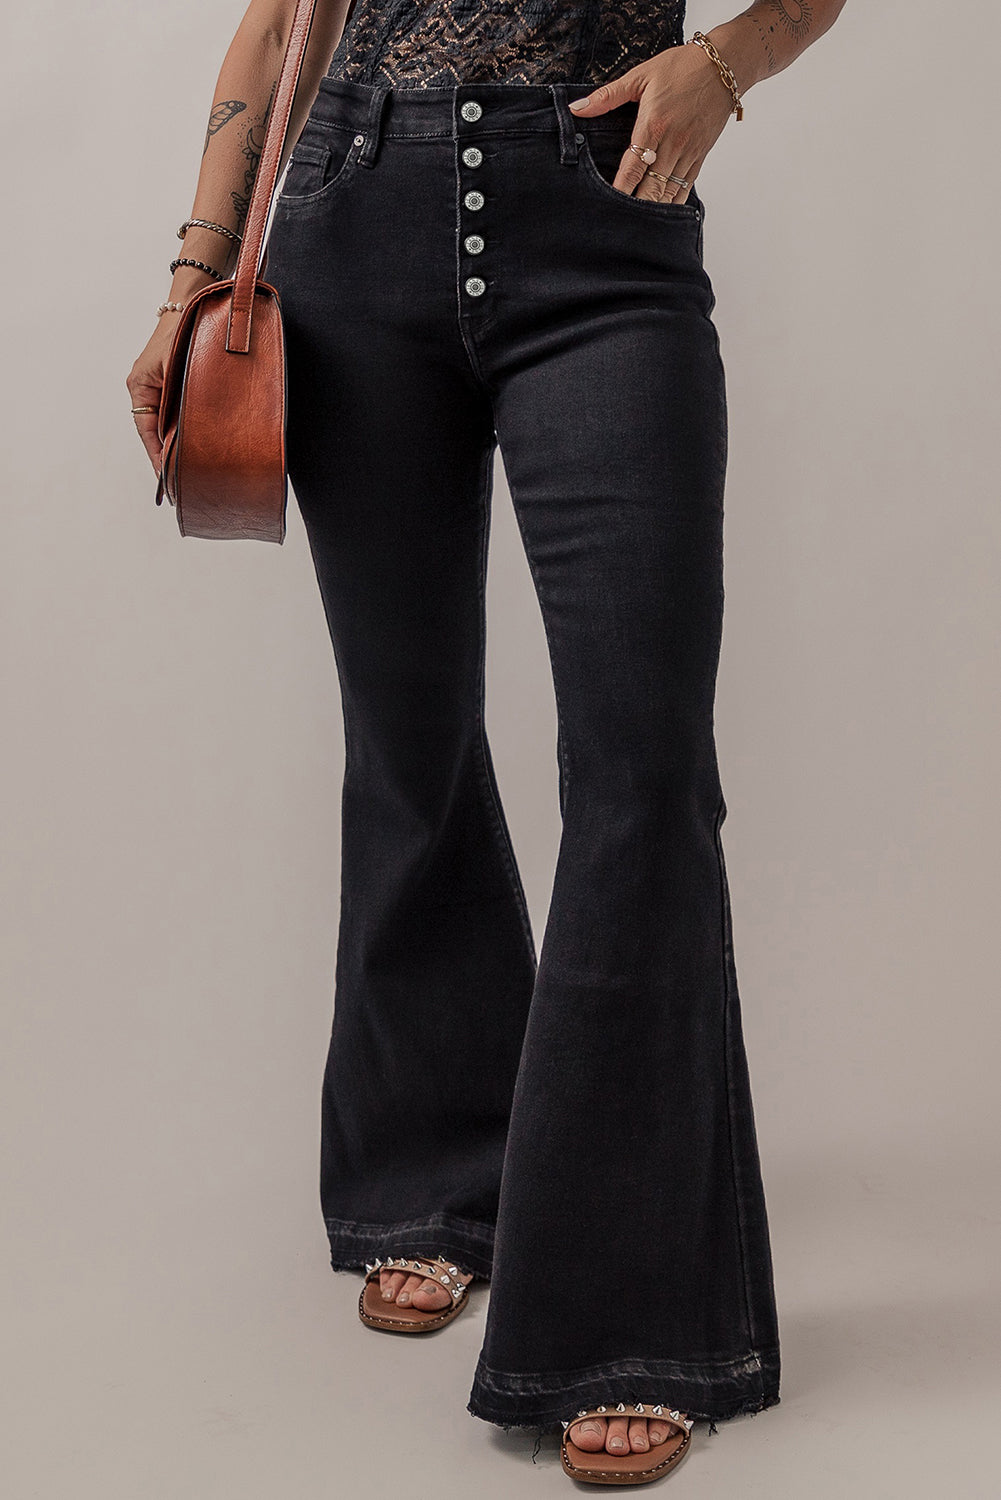 Black 71%Cotton+27.5%Polyester+1.5%Elastane Black High Waist Button Front Women's Flare Jeans - women's jeans at TFC&H Co.